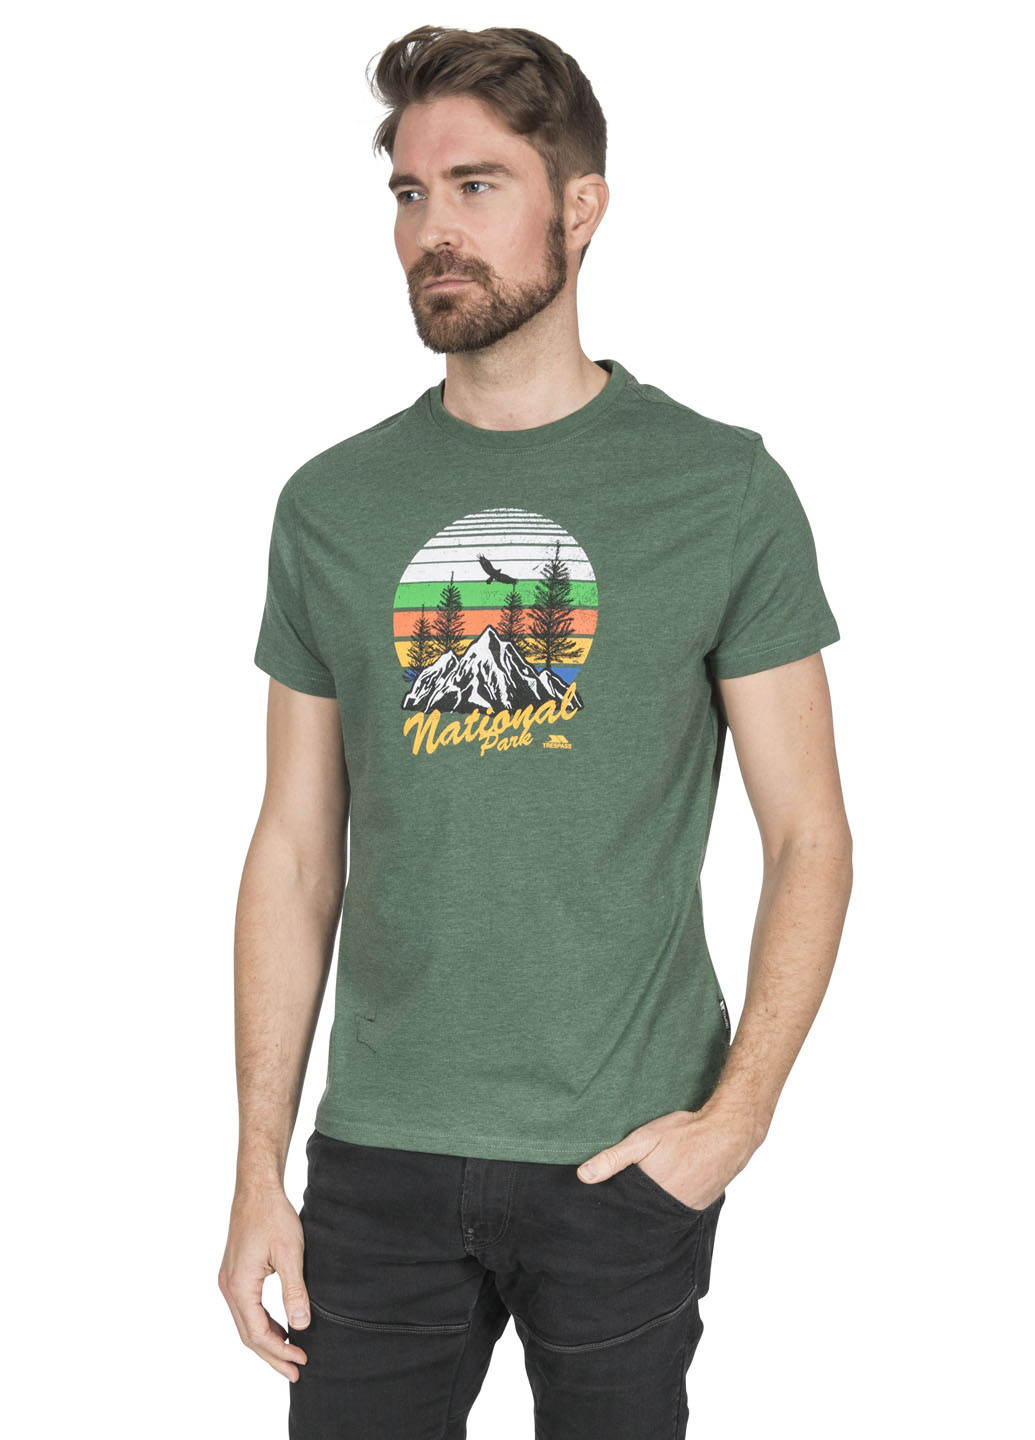 Зеленая футболка Trespass